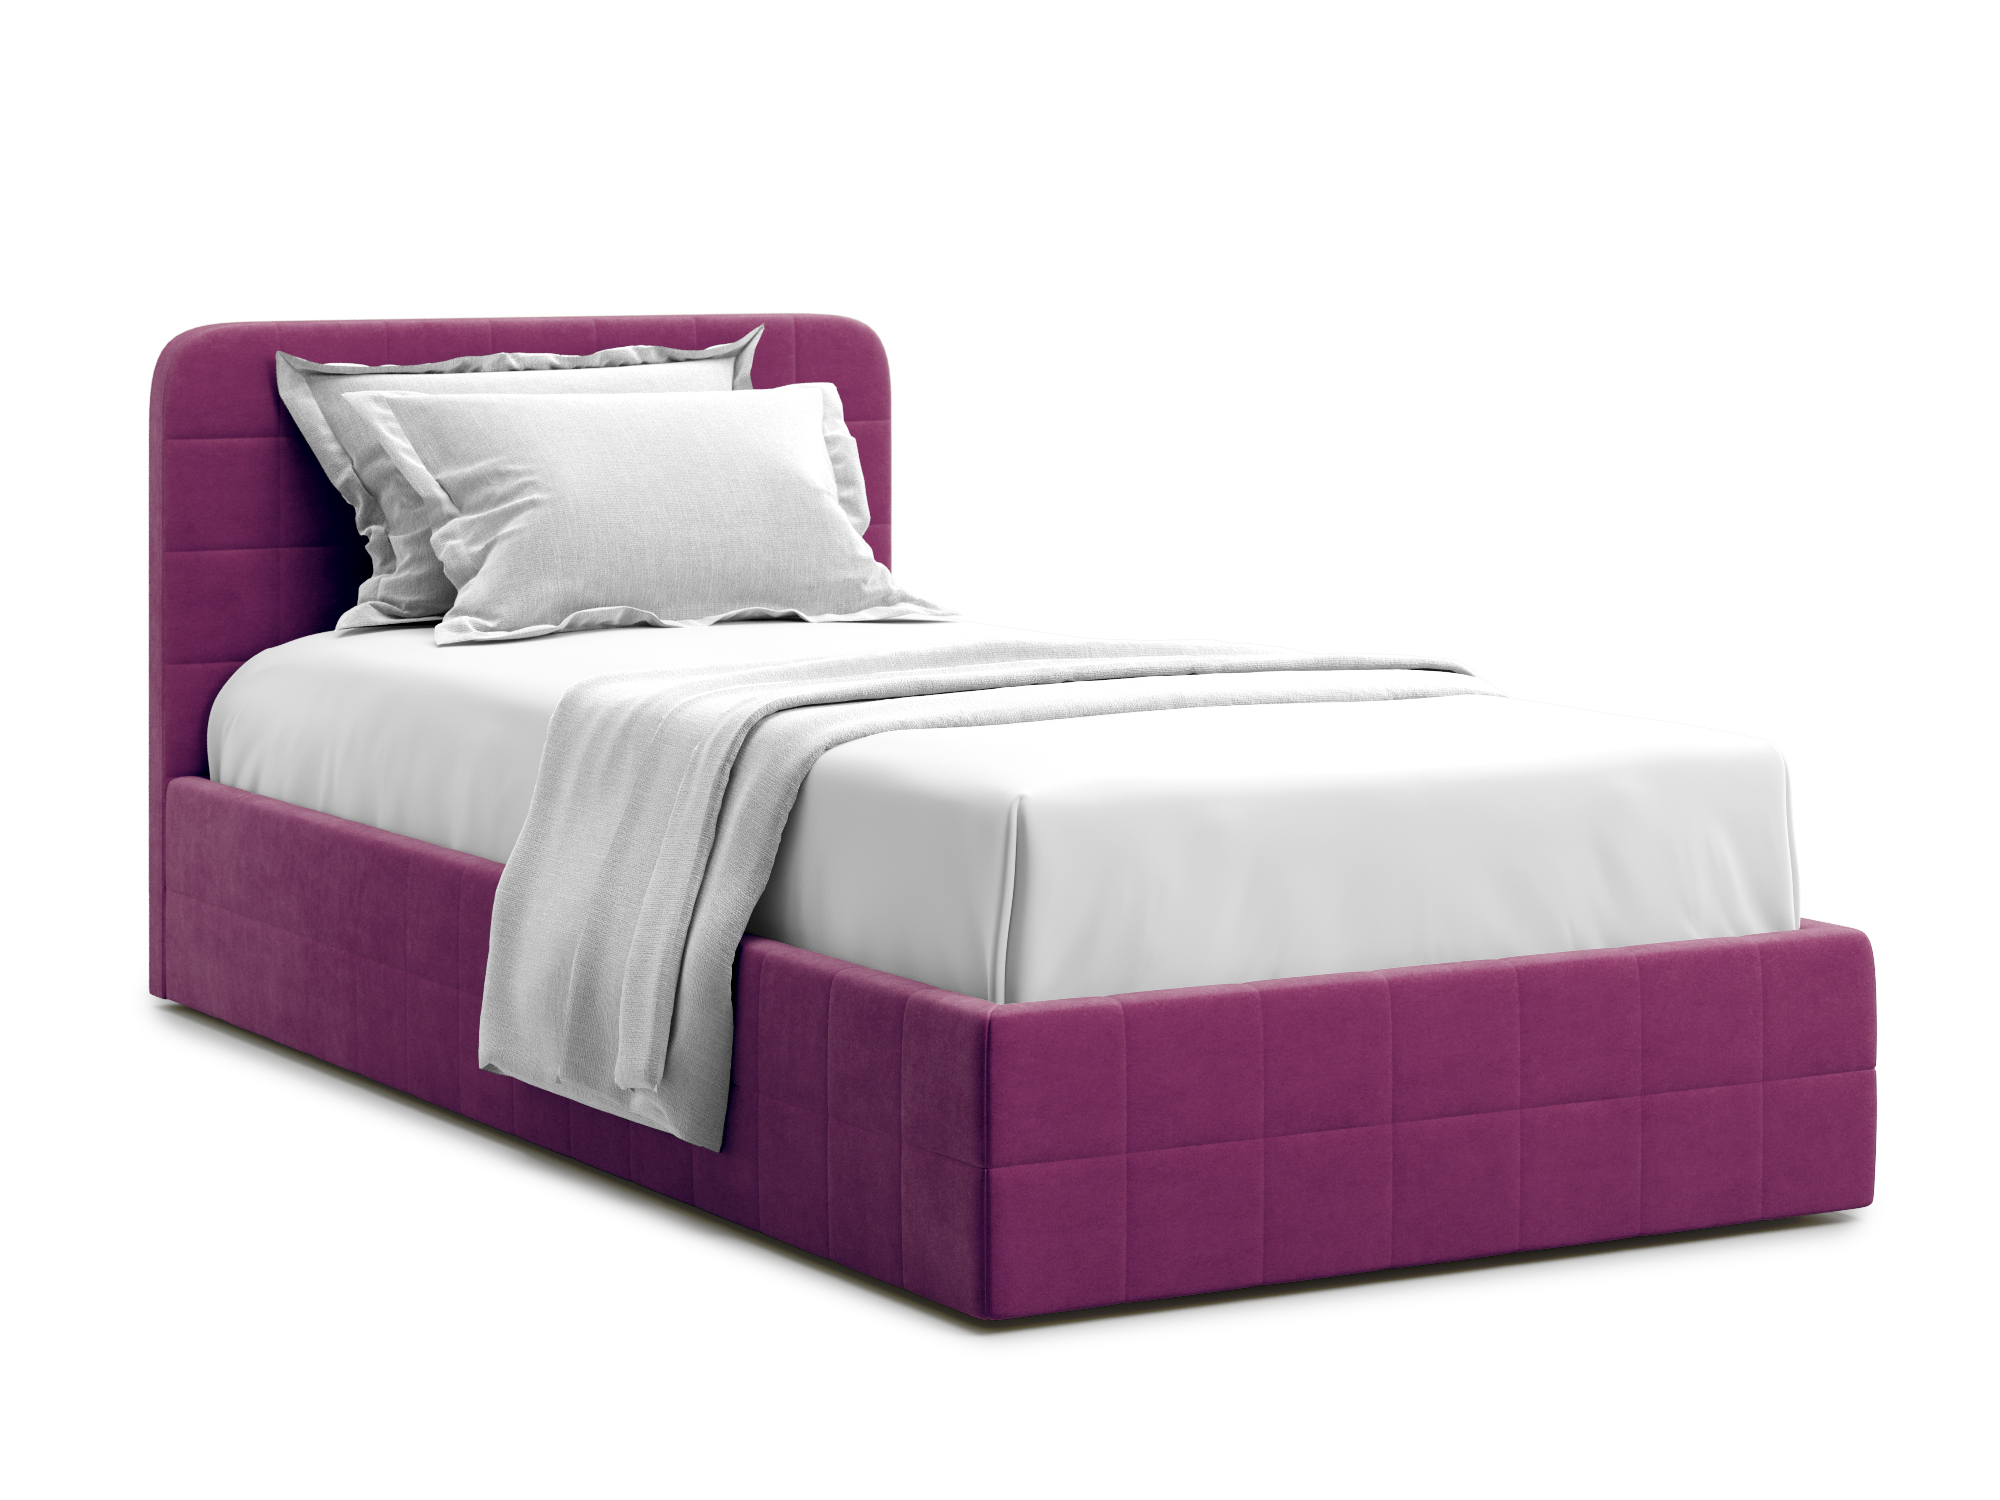 Кровать Adda 90 Velutto 15 Фиолетовый, Массив, ДСП кровать adda 120 velutto 23 шоколадный массив дсп